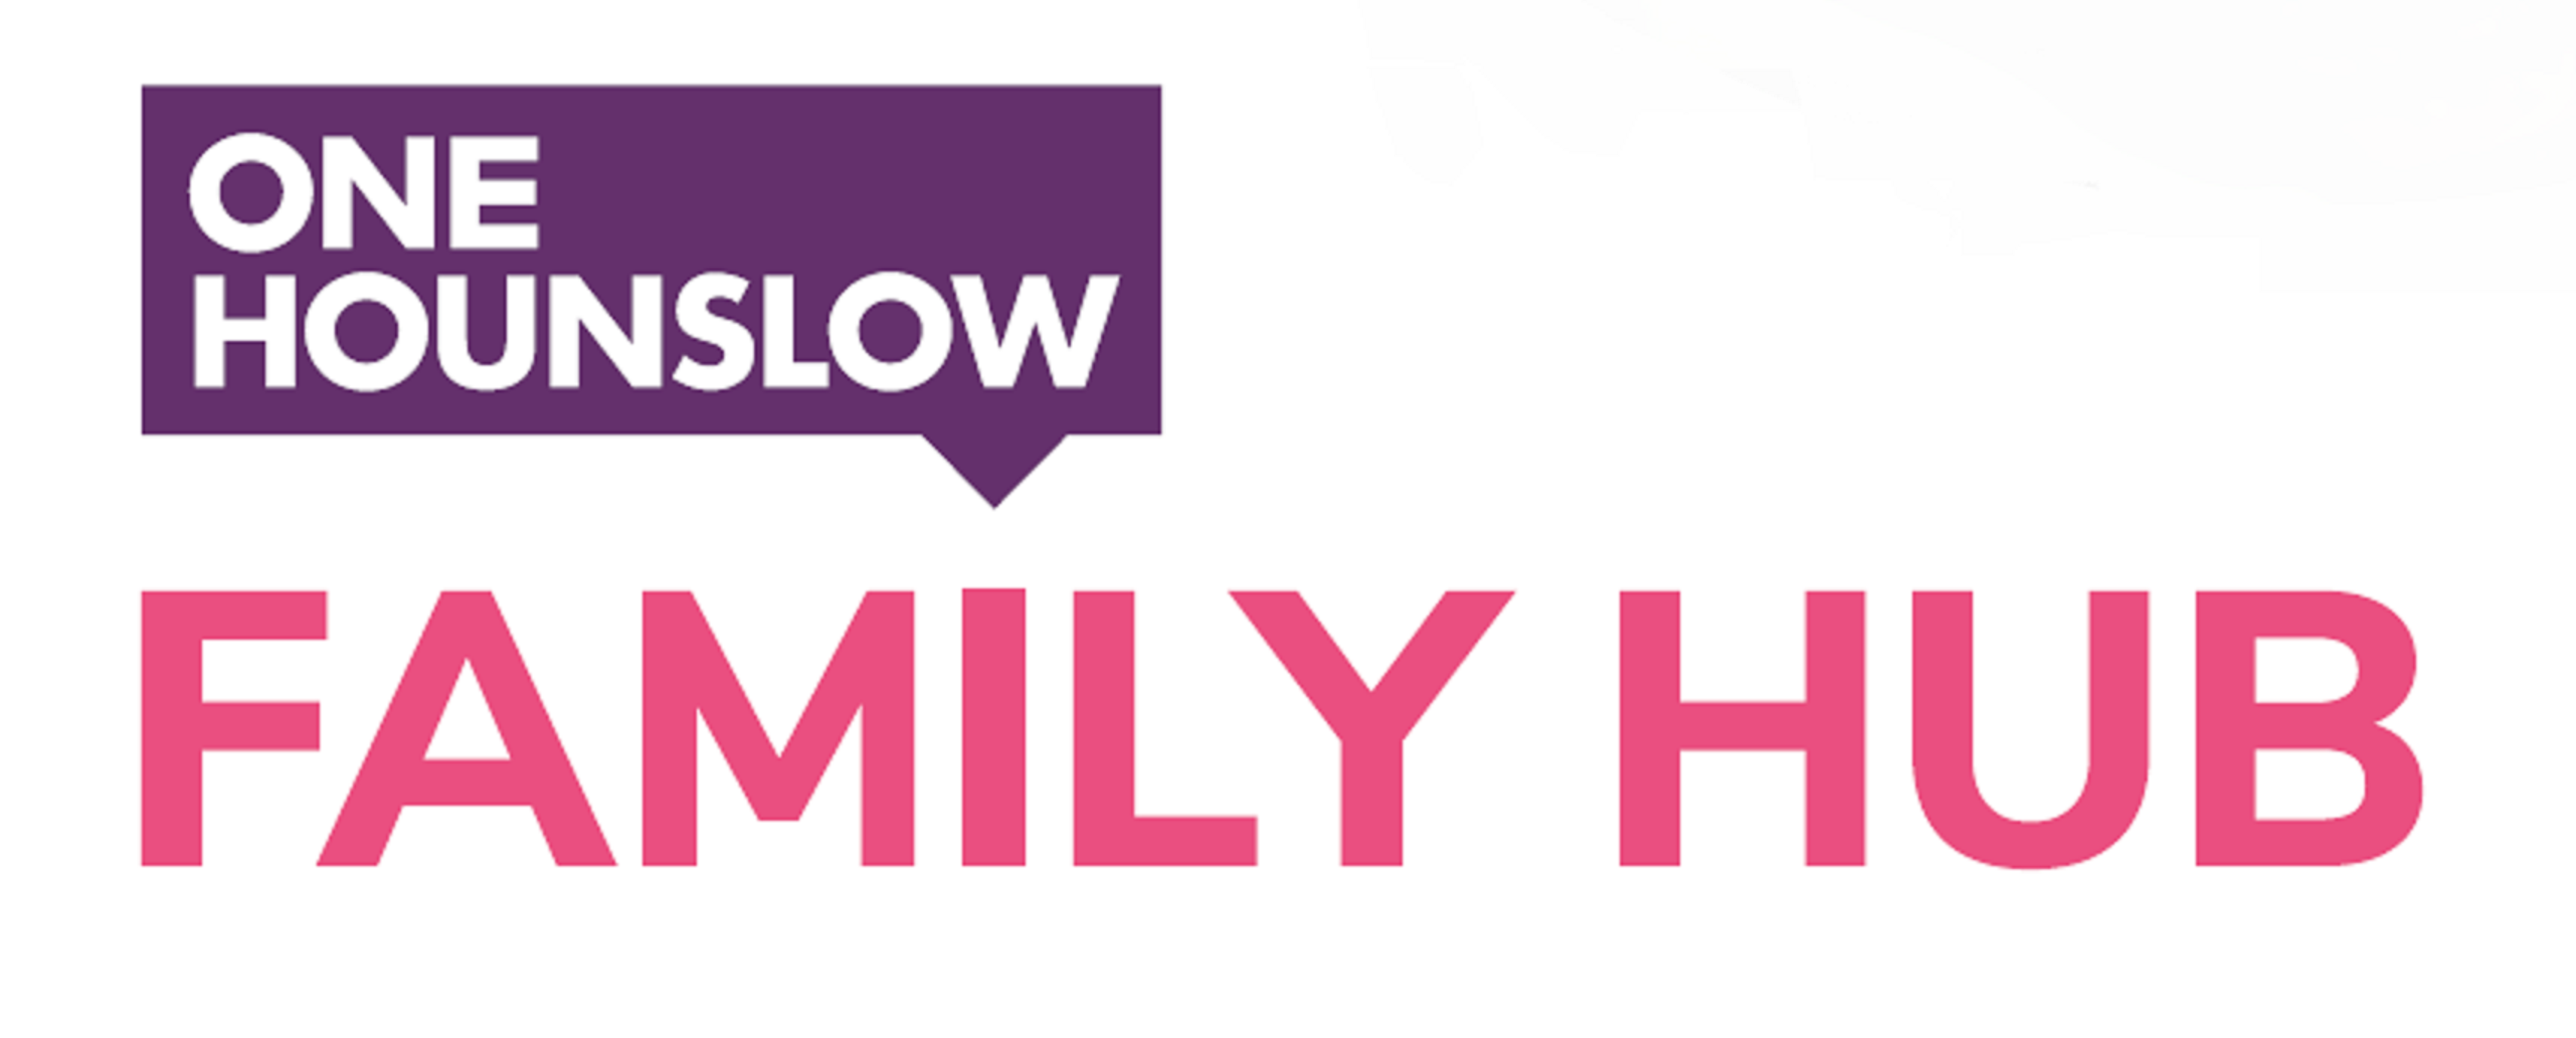 image of Family hub logo